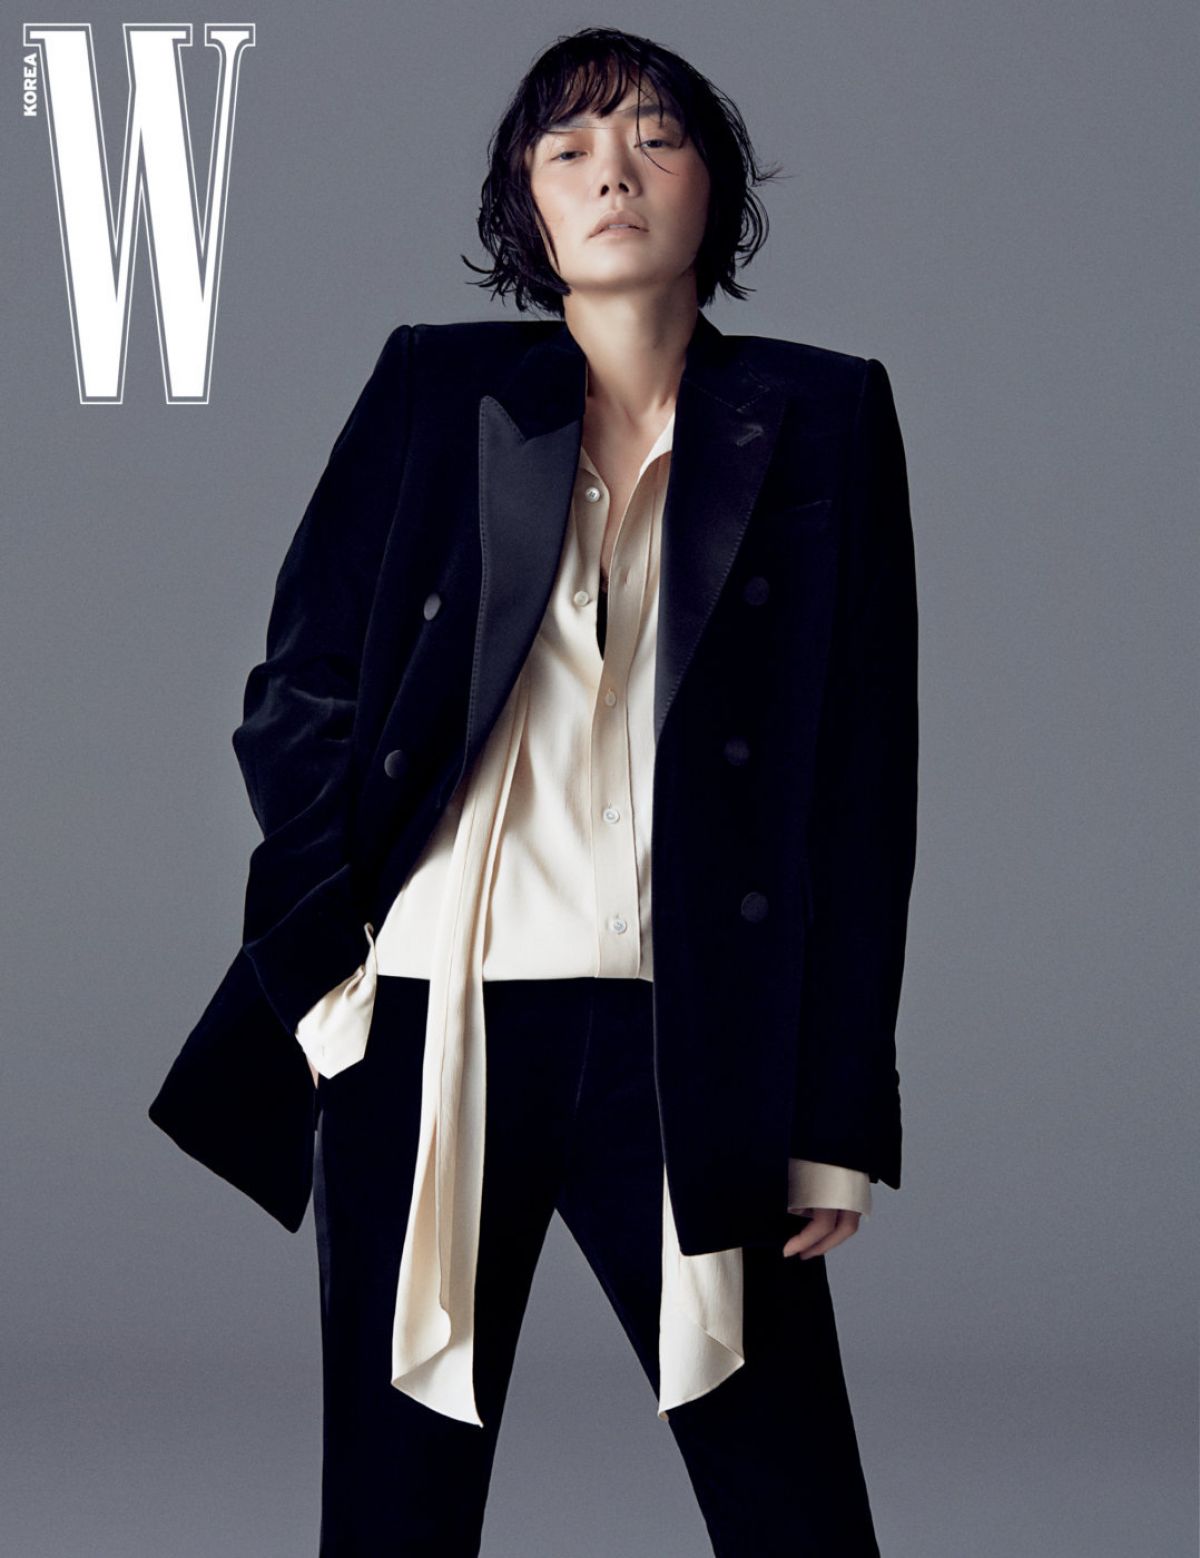 Bae DooNa For VOGUE Korea Magazine December Issue - Kpopmap